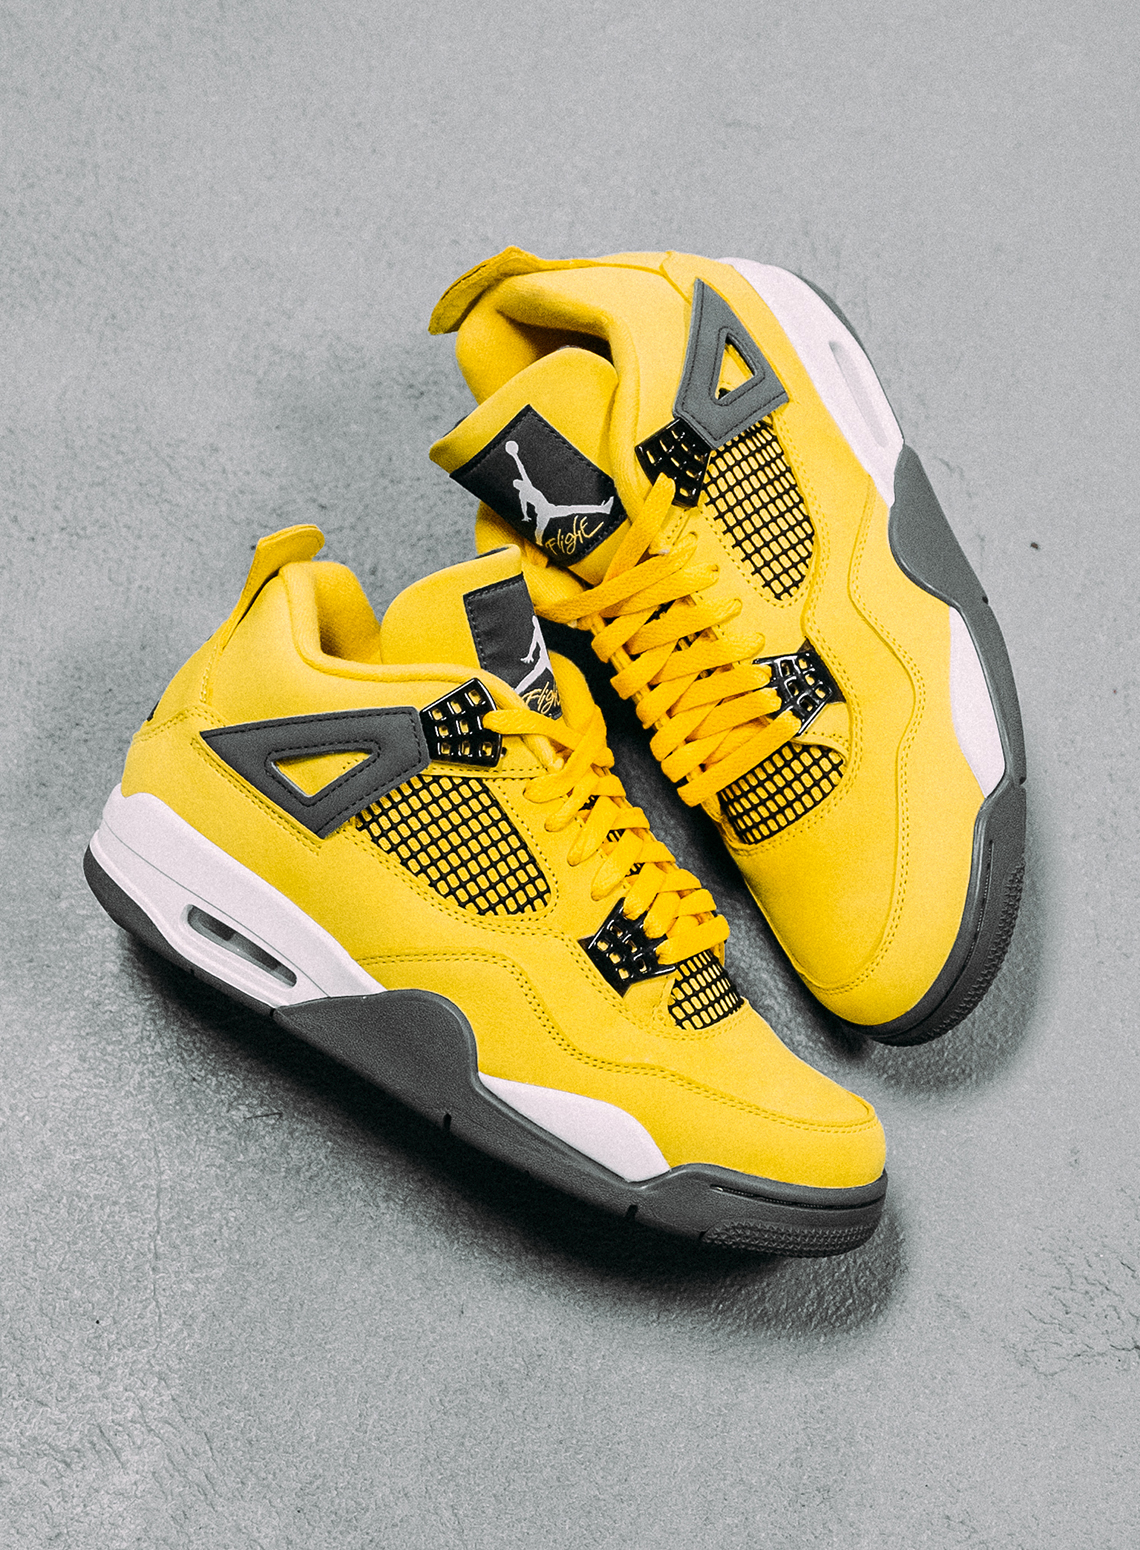 Air Jordan yellow 4s jordans 4 "Lightning" 2021 Buyer's Guide | SneakerNews.com